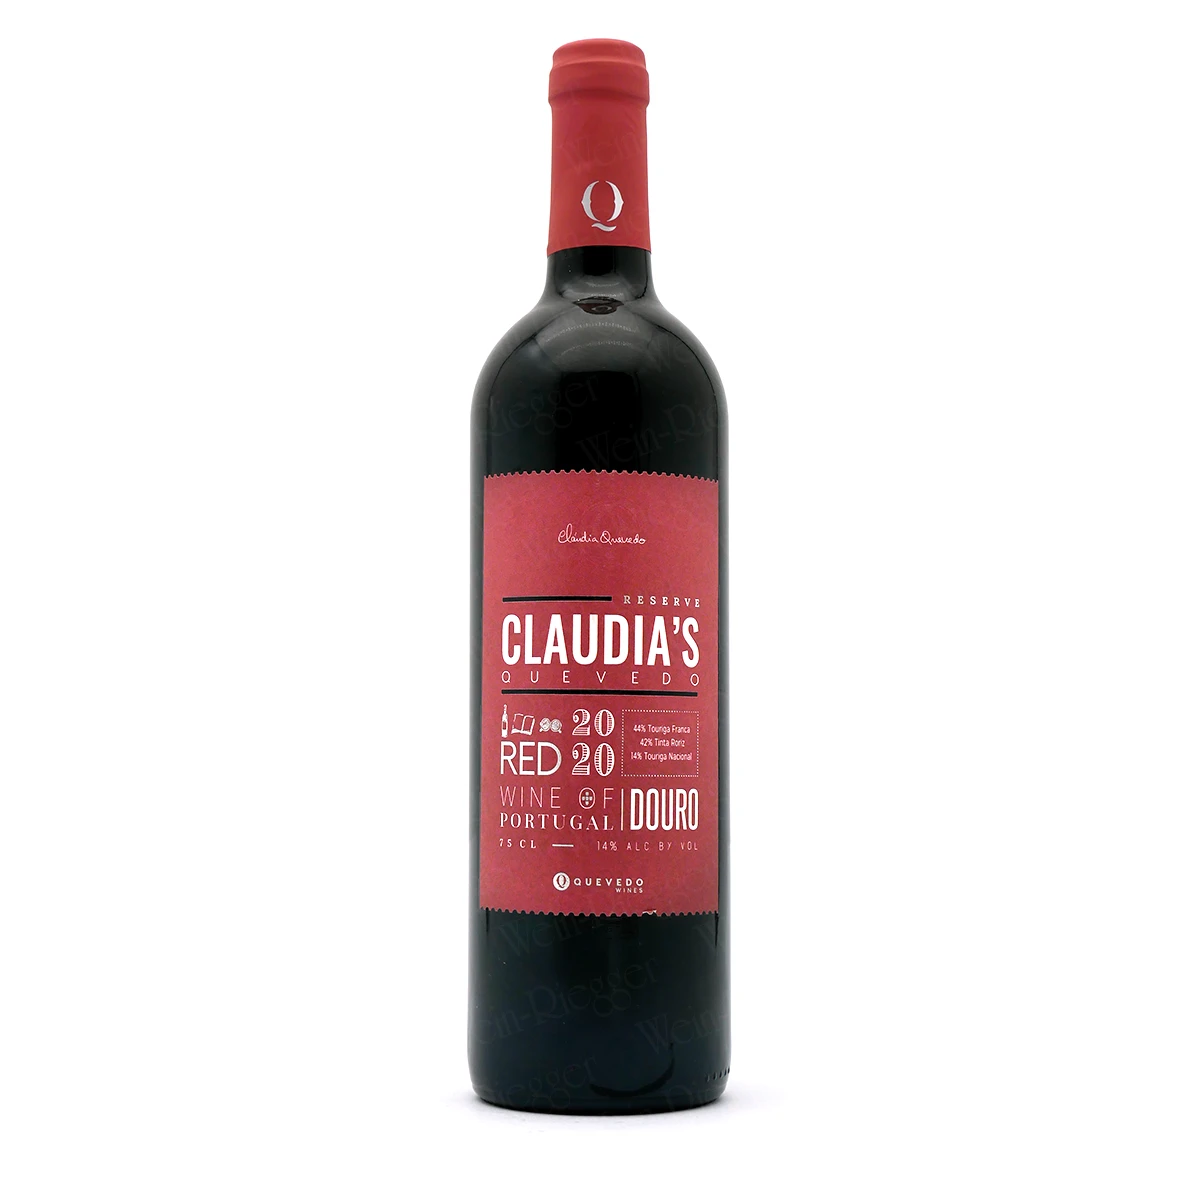 Claudia's Reserve RED DOC Douro - Quevedo